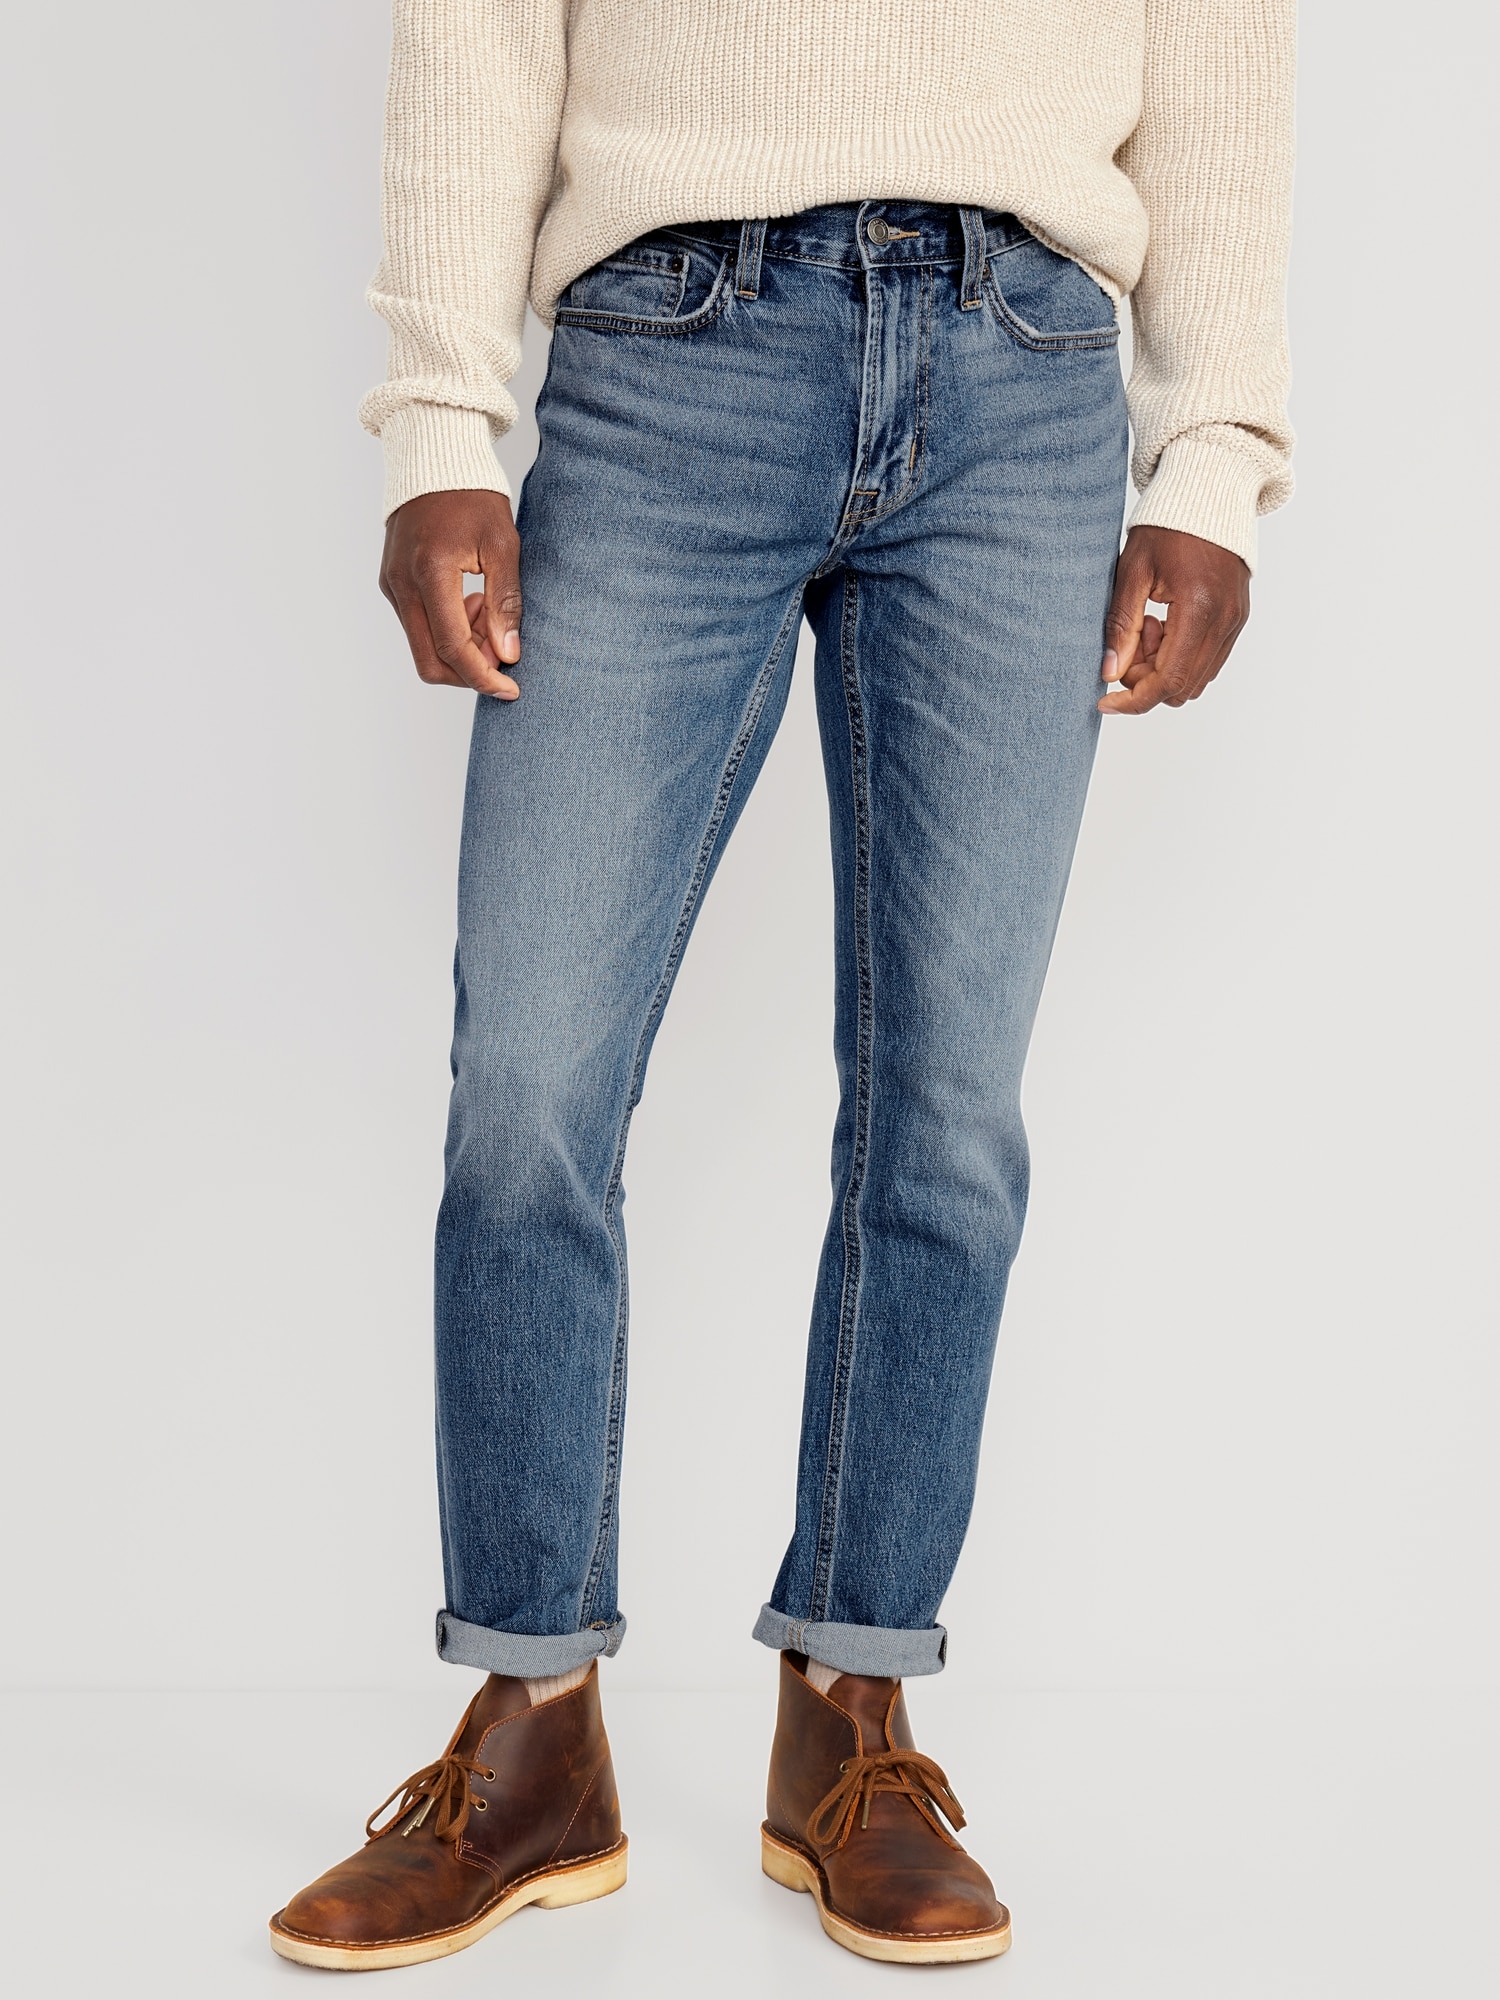 Relaxed Slim Taper Built-In Flex Jeans